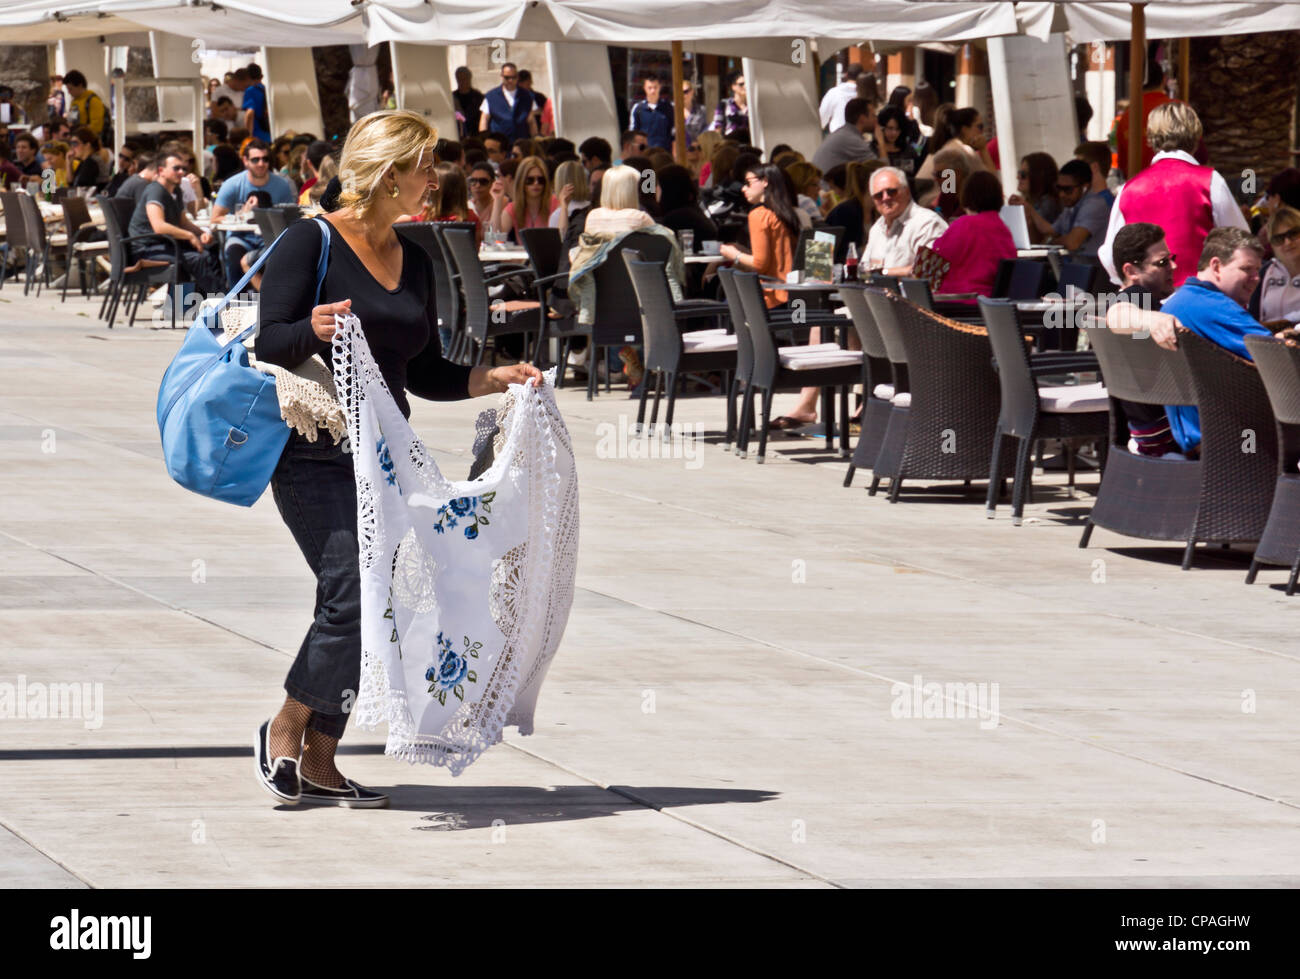 Split, Dalmatian coast of Croatia - the Riva seafront walk. Woman selling lace. Stock Photo